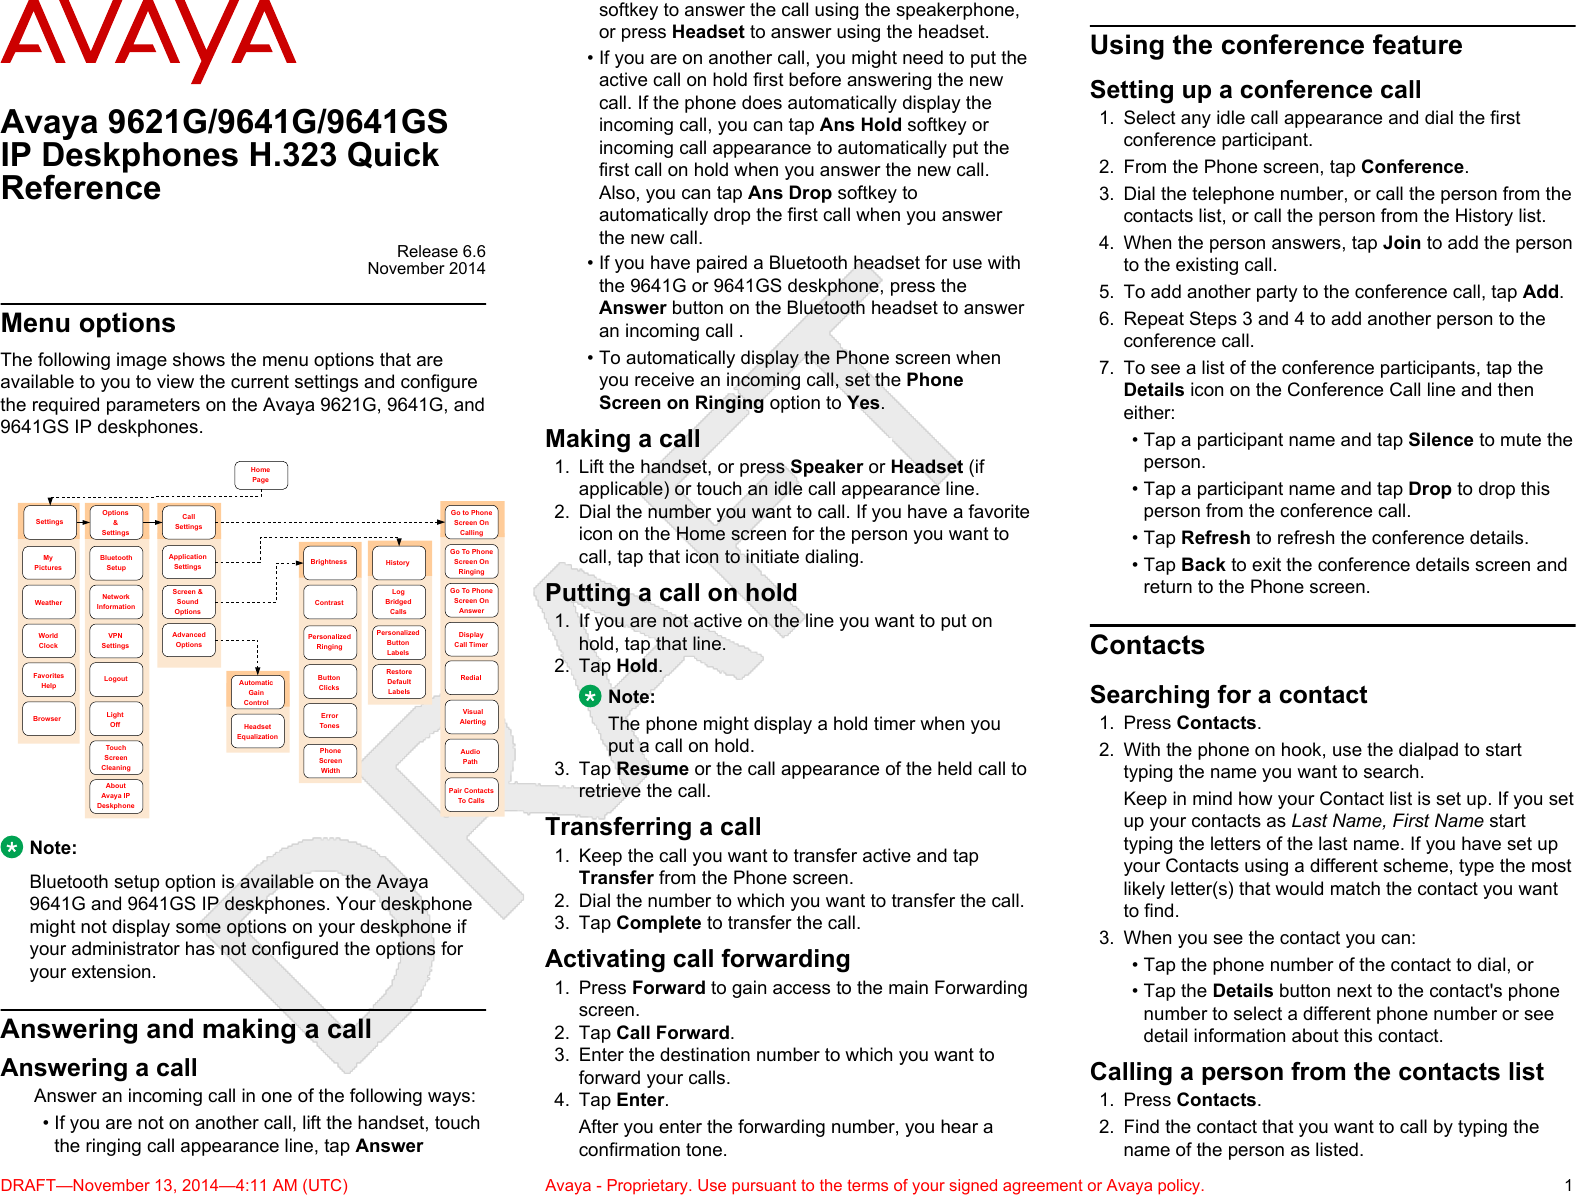 Avaya 9641GS IP Deskphone User Manual